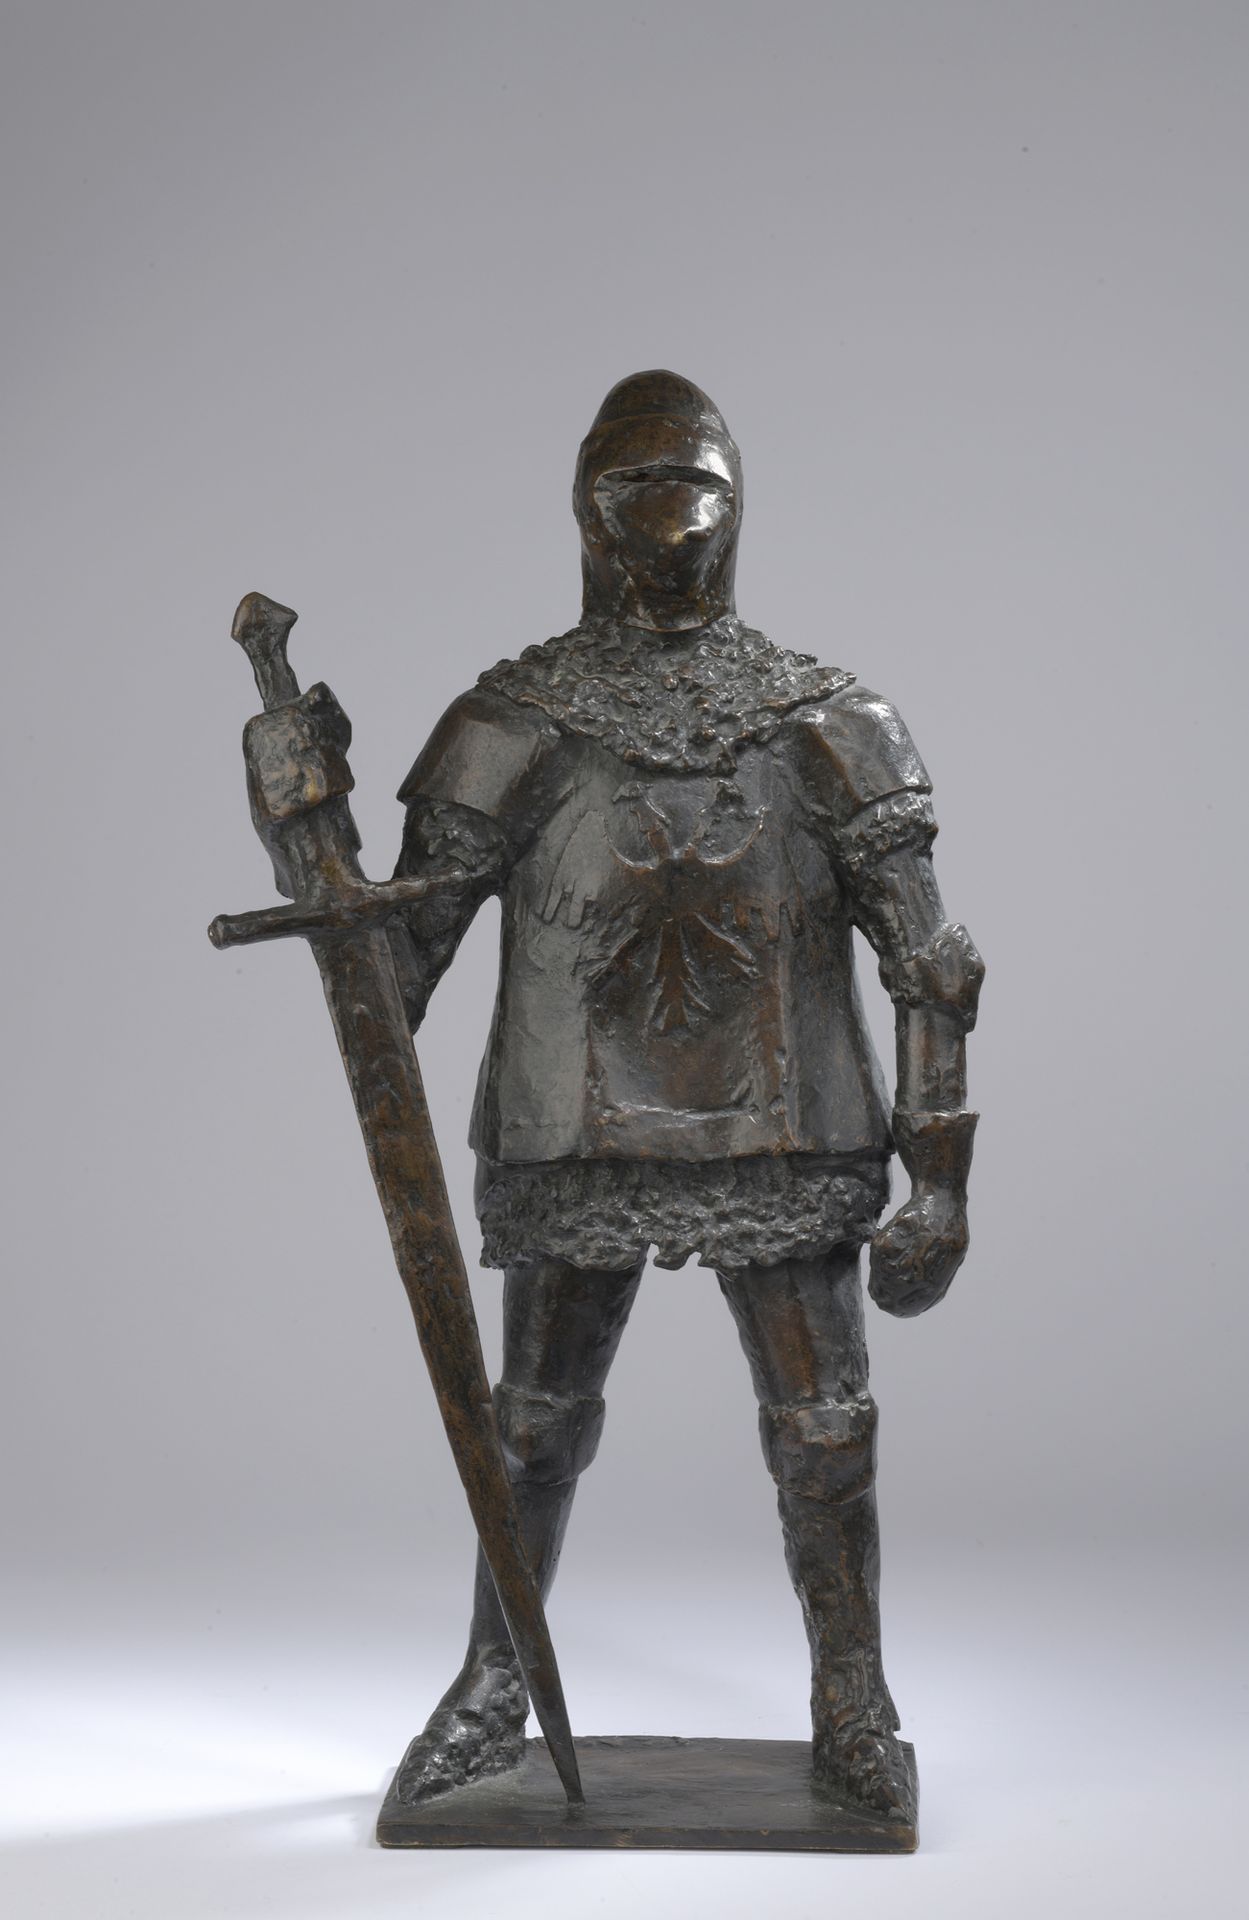 Null 20 世纪下半叶的法国艺术家。
持剑骑士
带棕色铜锈的青铜证物，露台上有模糊不清的签名。铸造厂印章 Scuderi，巴黎。
H.43.5 厘米